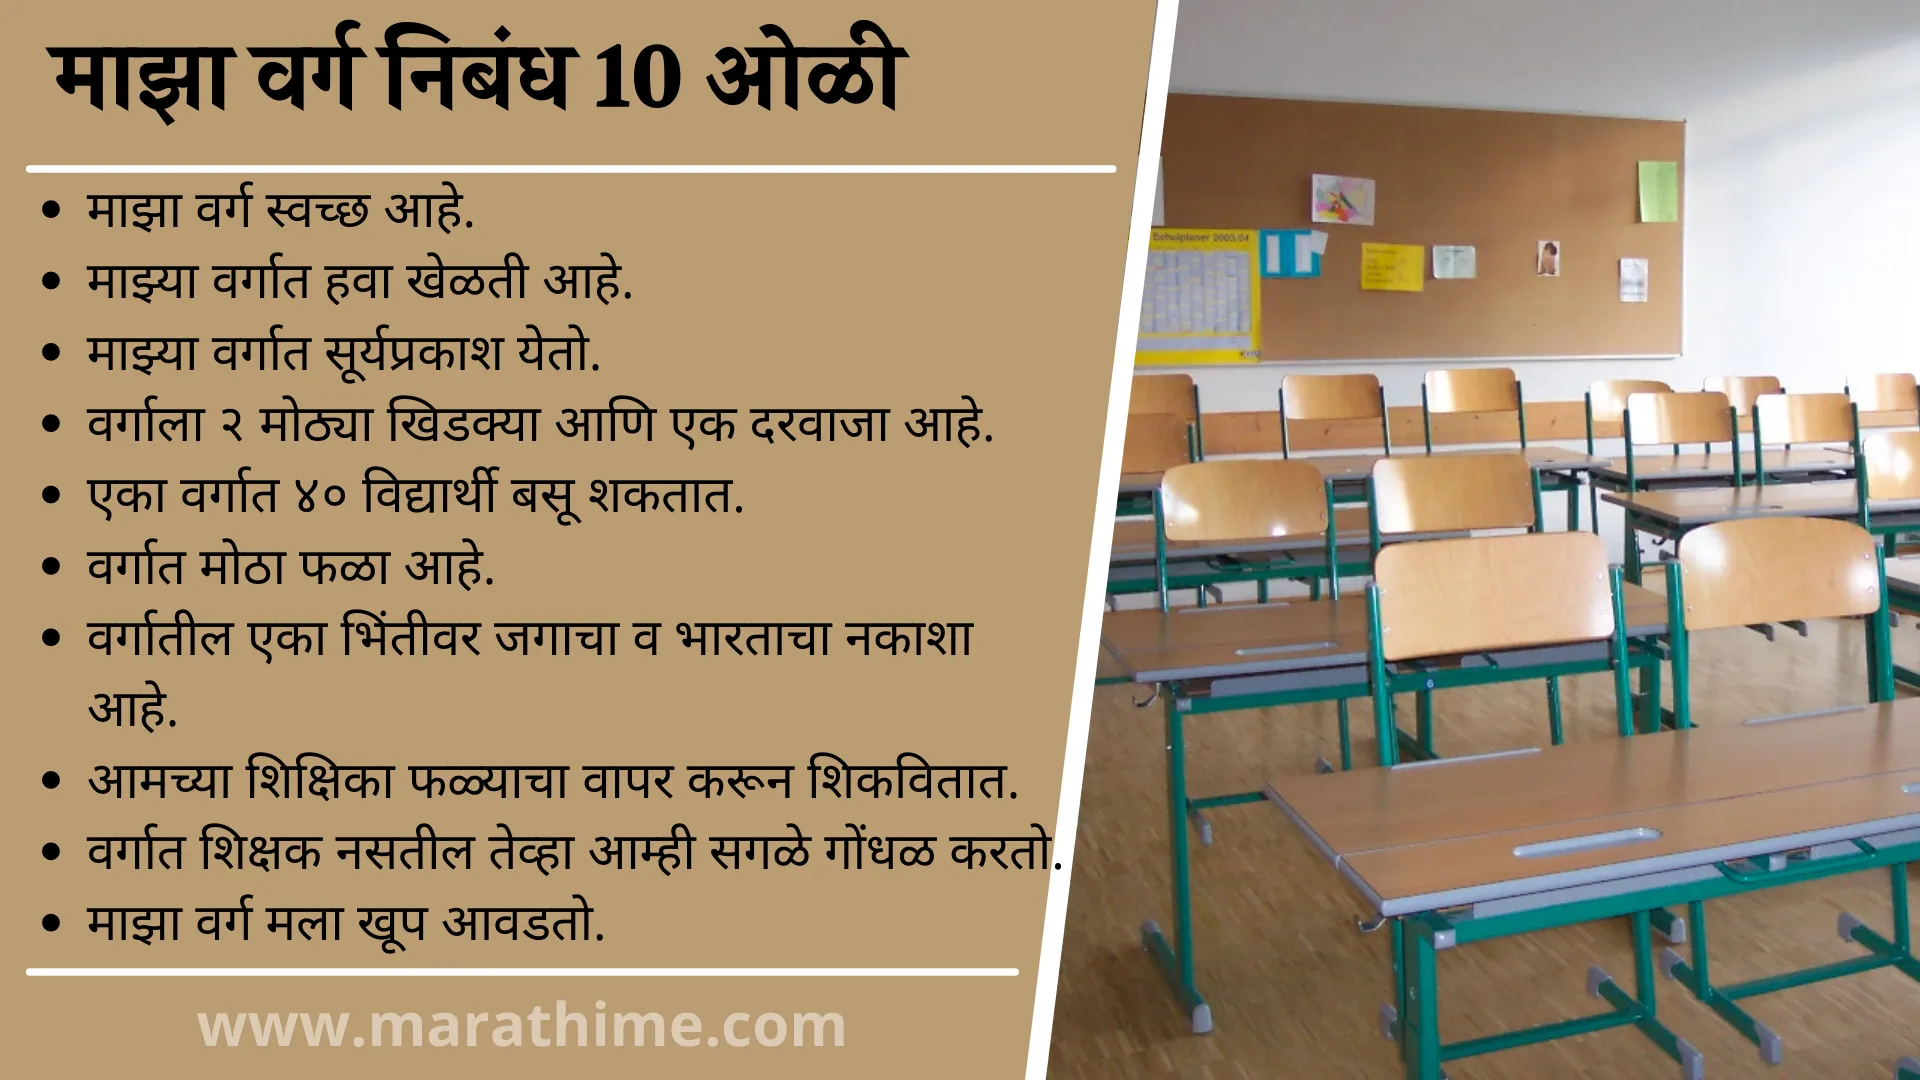 माझा वर्ग निबंध 10 ओळी, 10 Lines On My classroom in Marathi